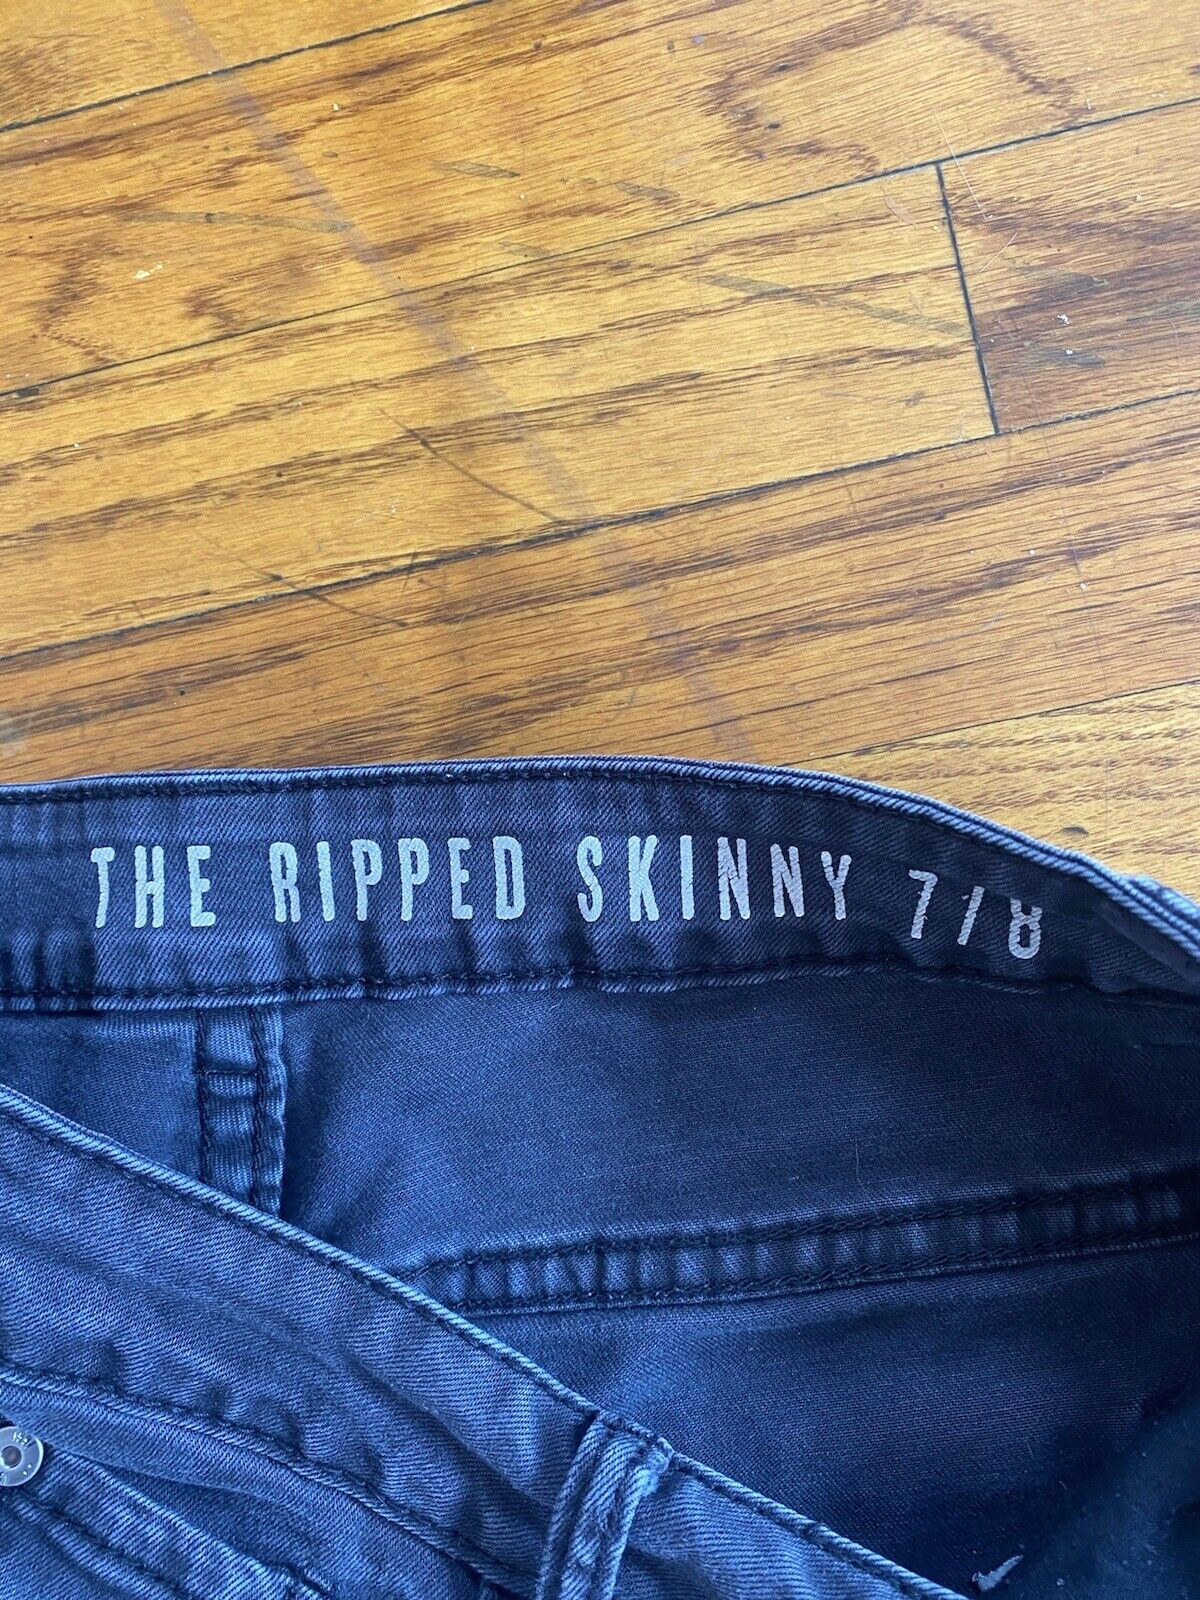 Black Distressed Skinny Jeans - 91 - Size 6